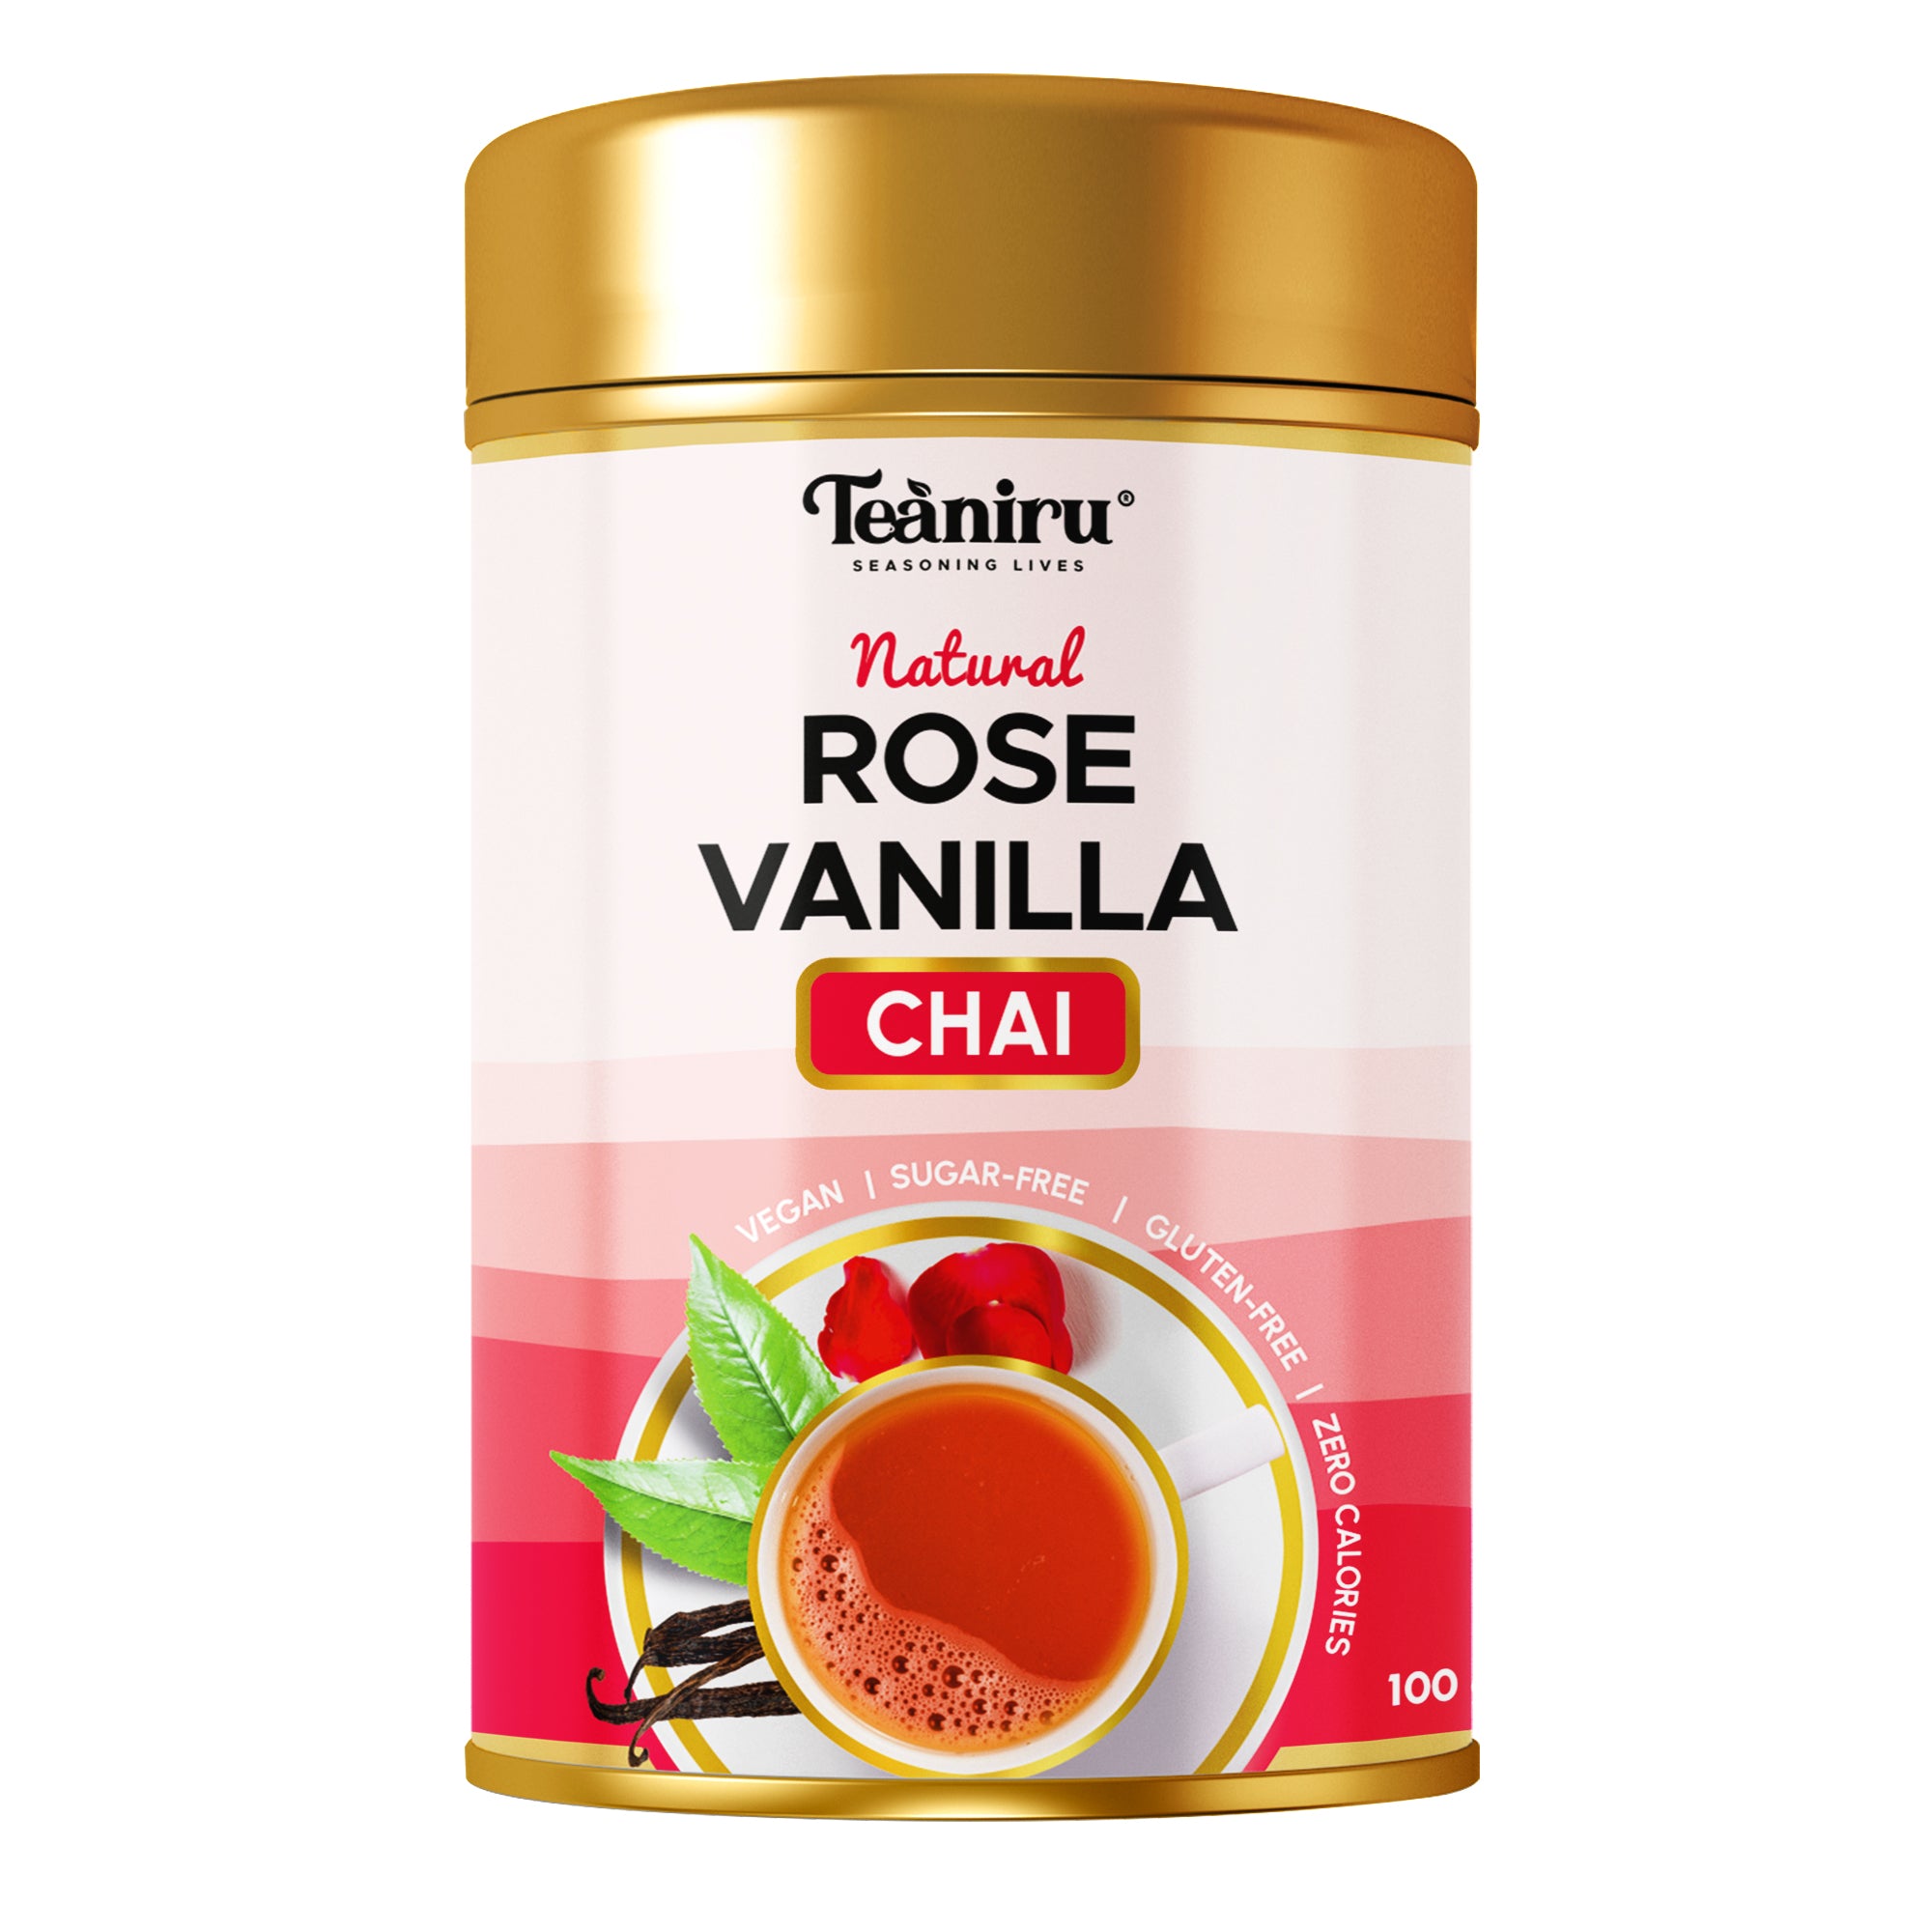 Rose Vanilla Chai